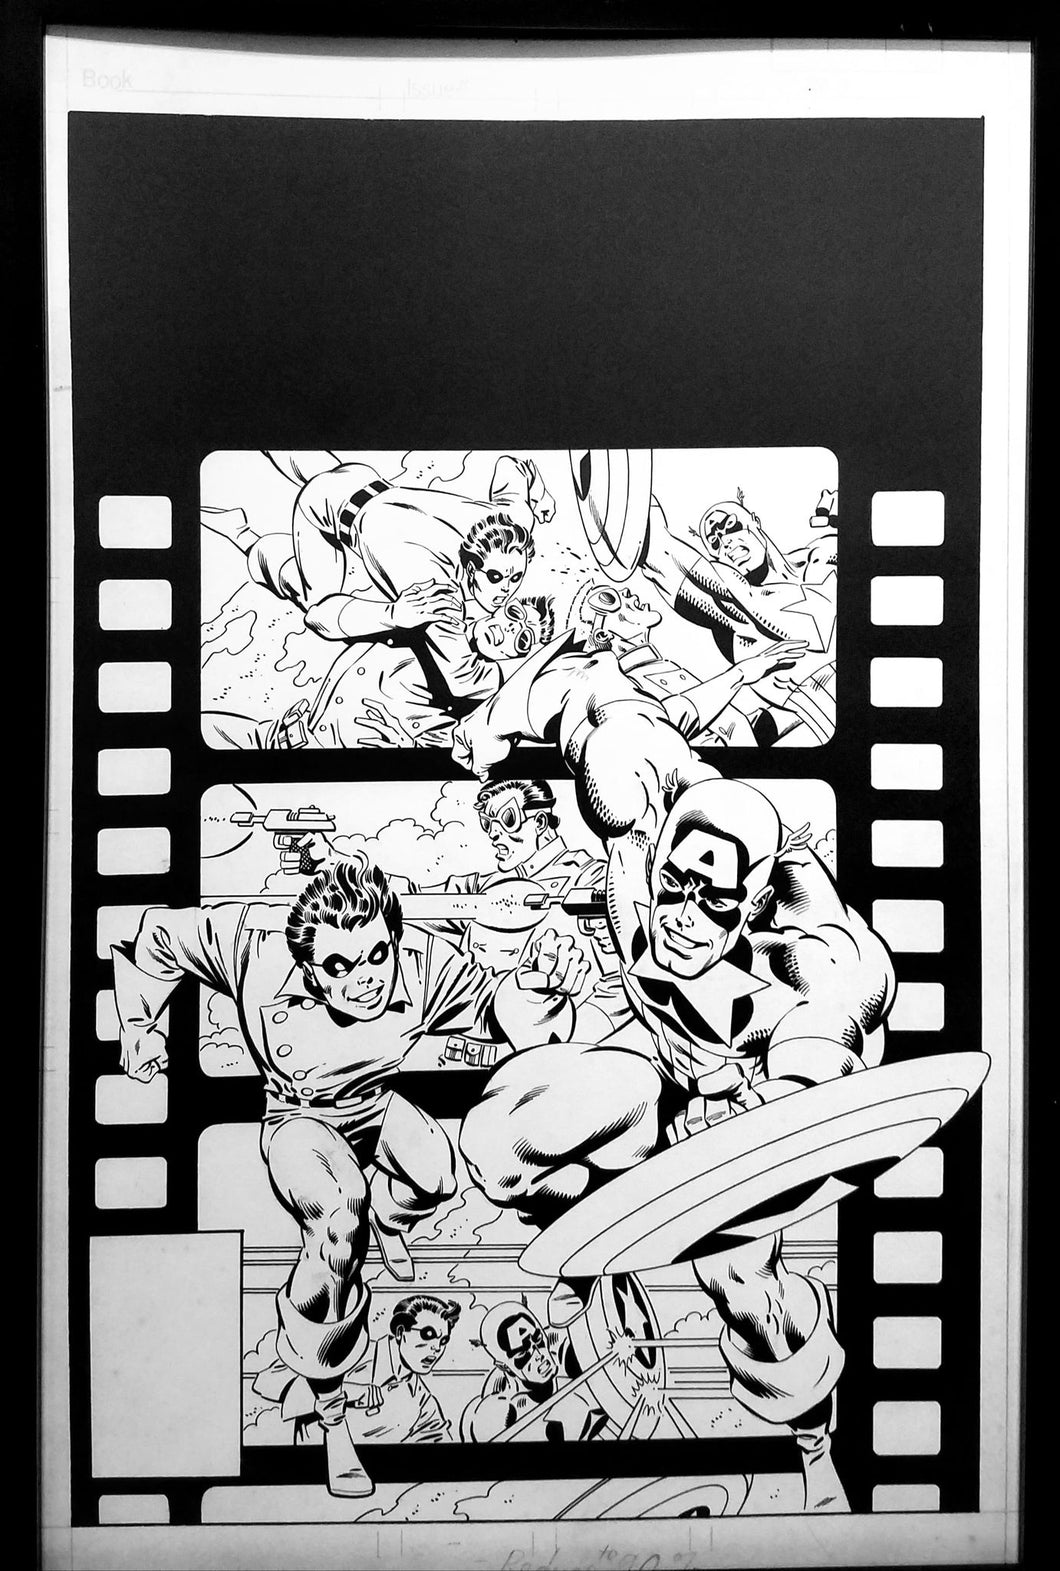 Captain America #281 w/ Bucky by Mike Zeck 11x17 FRAMED Original Art Poster Marvel Comics